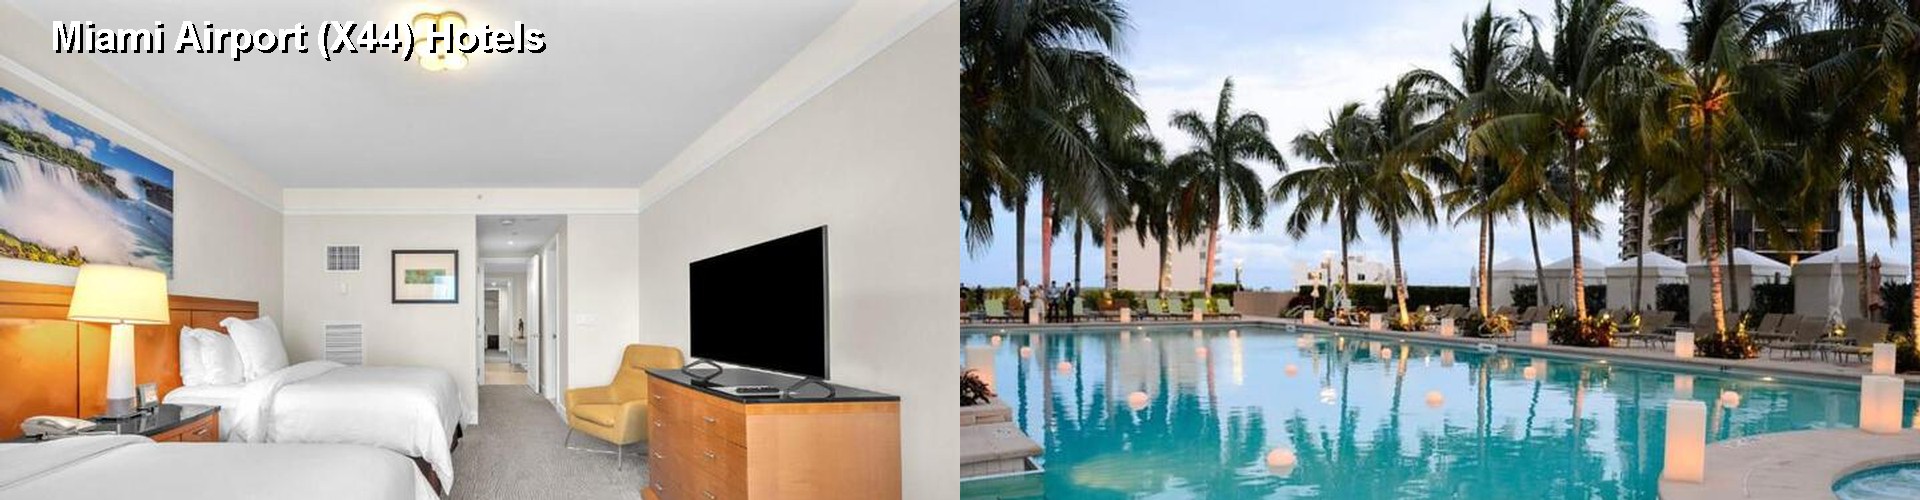 3 Best Hotels near Miami Airport (X44)